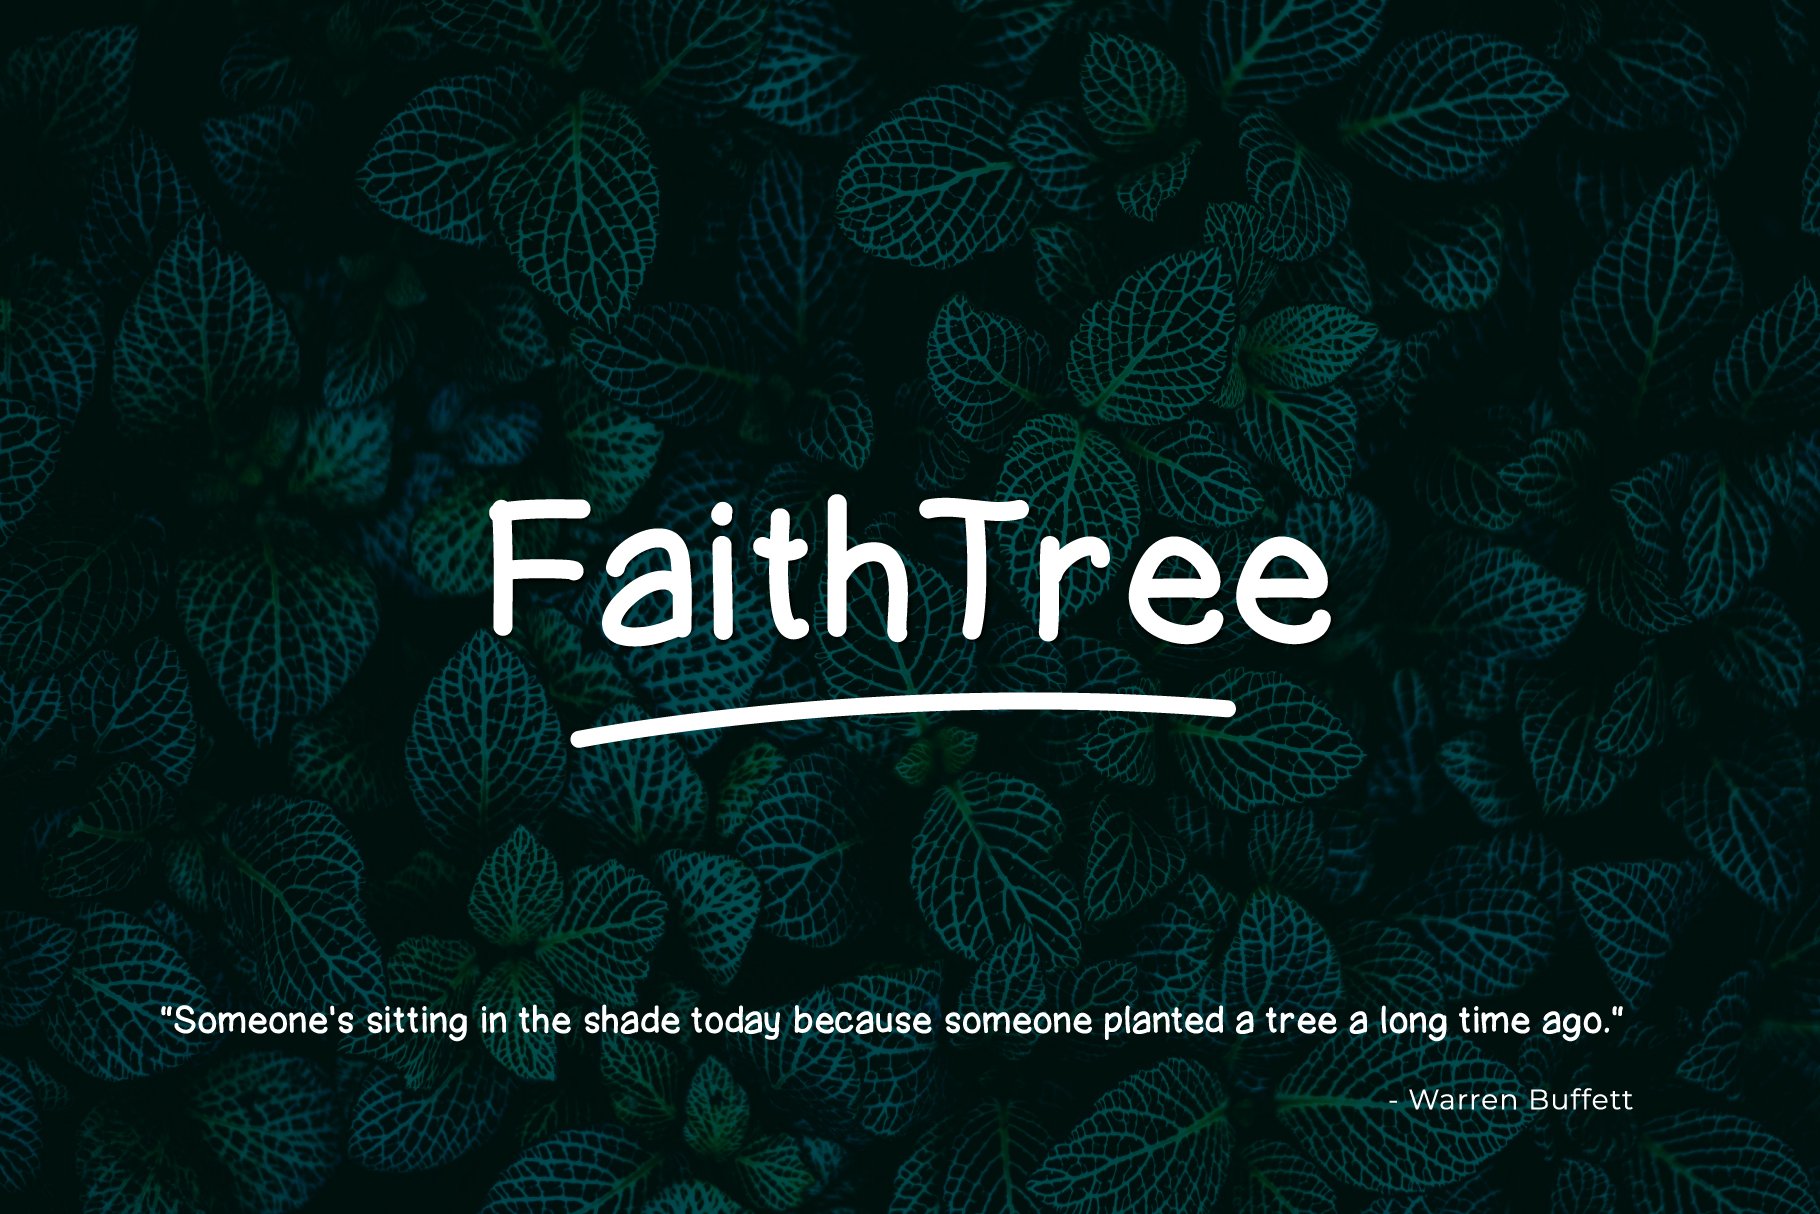 Faith Tree a Handwritten Font cover image.